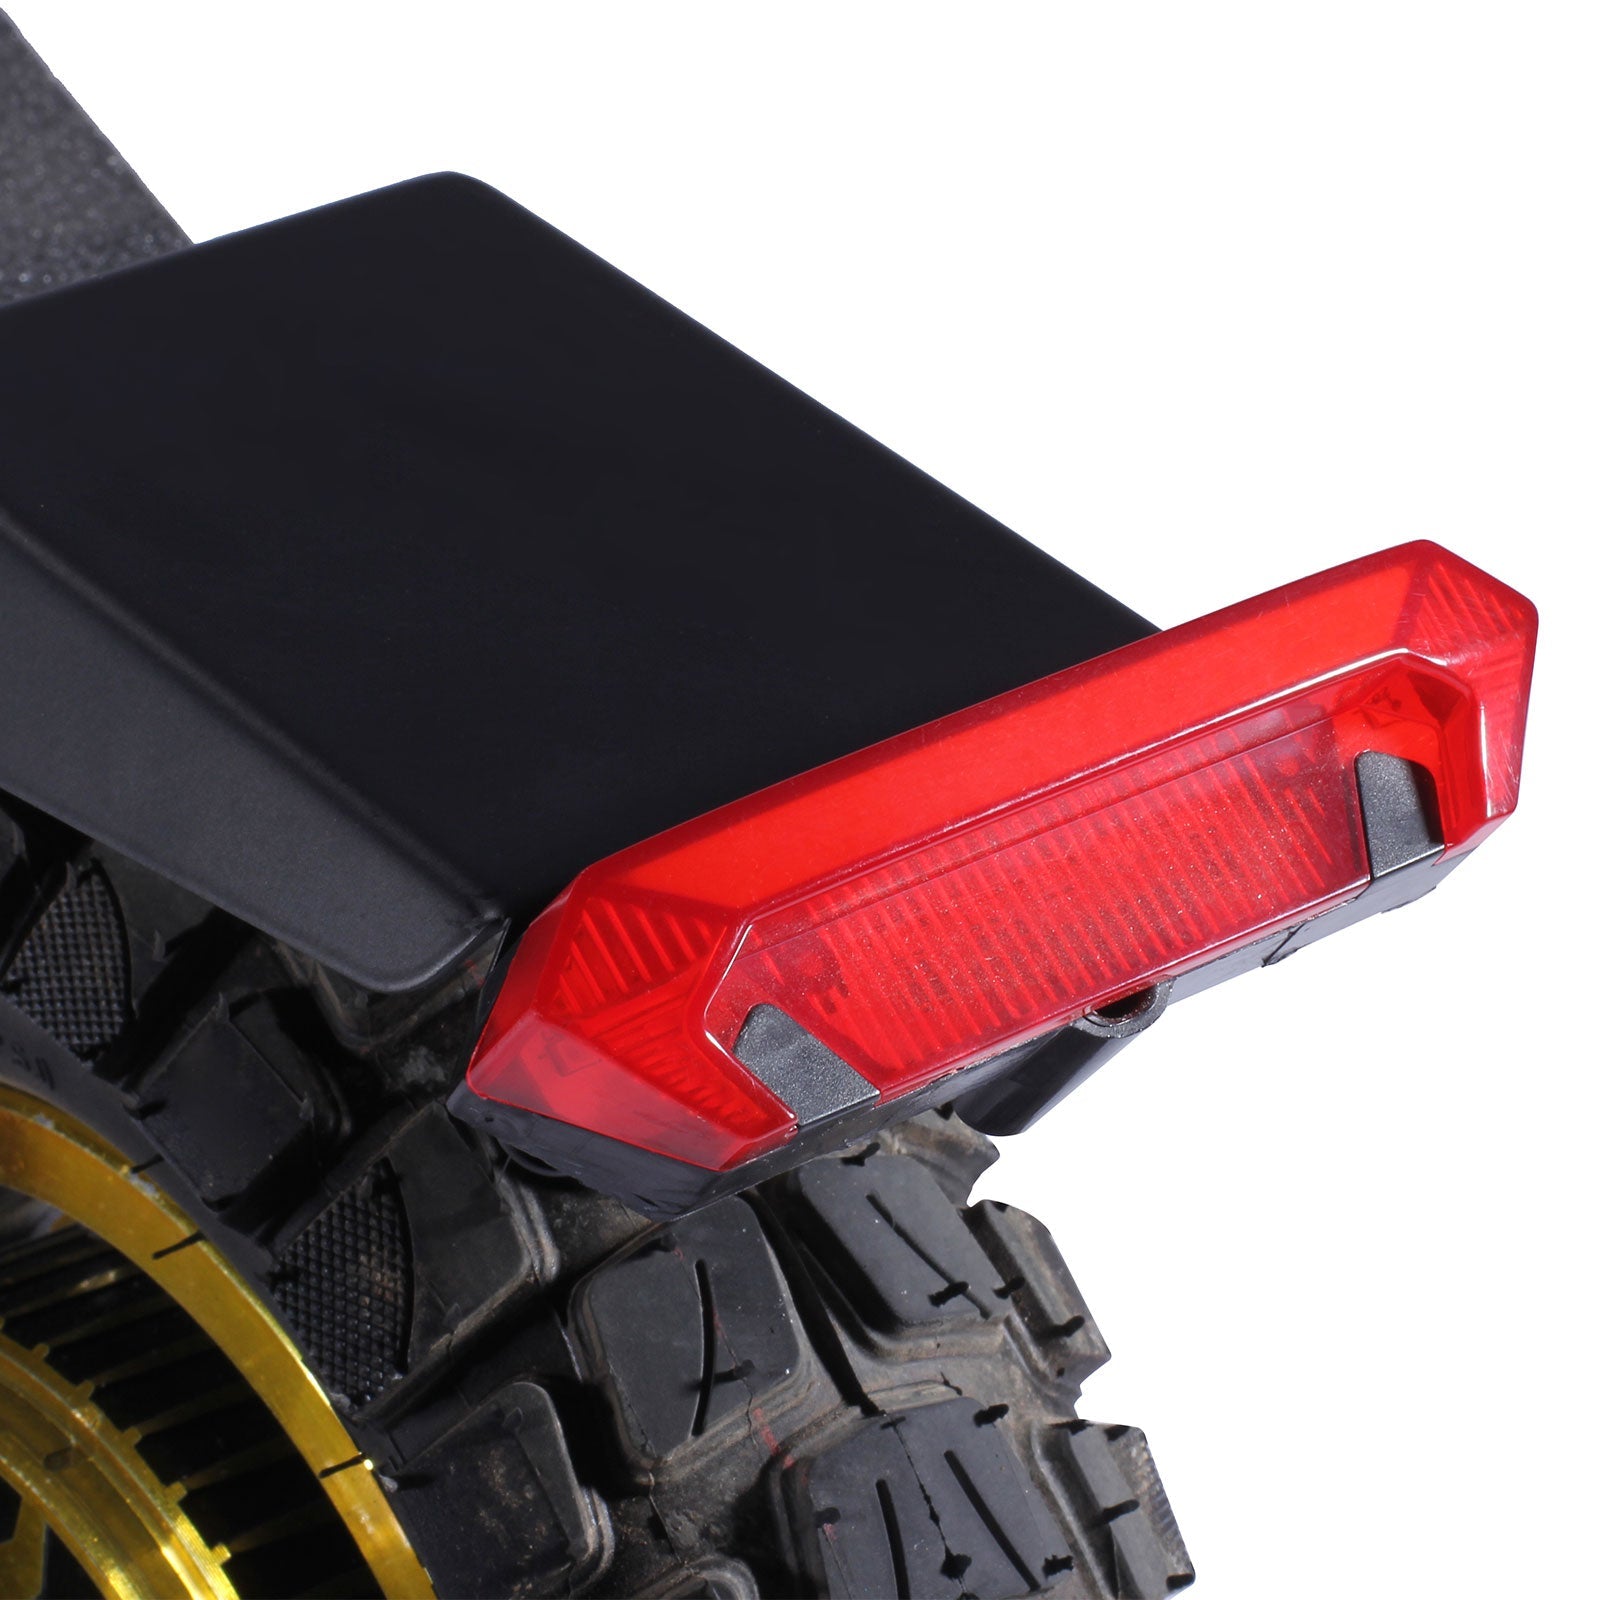 Bezior E-Scooter Tail Light Taillight For Bezior S1/S2